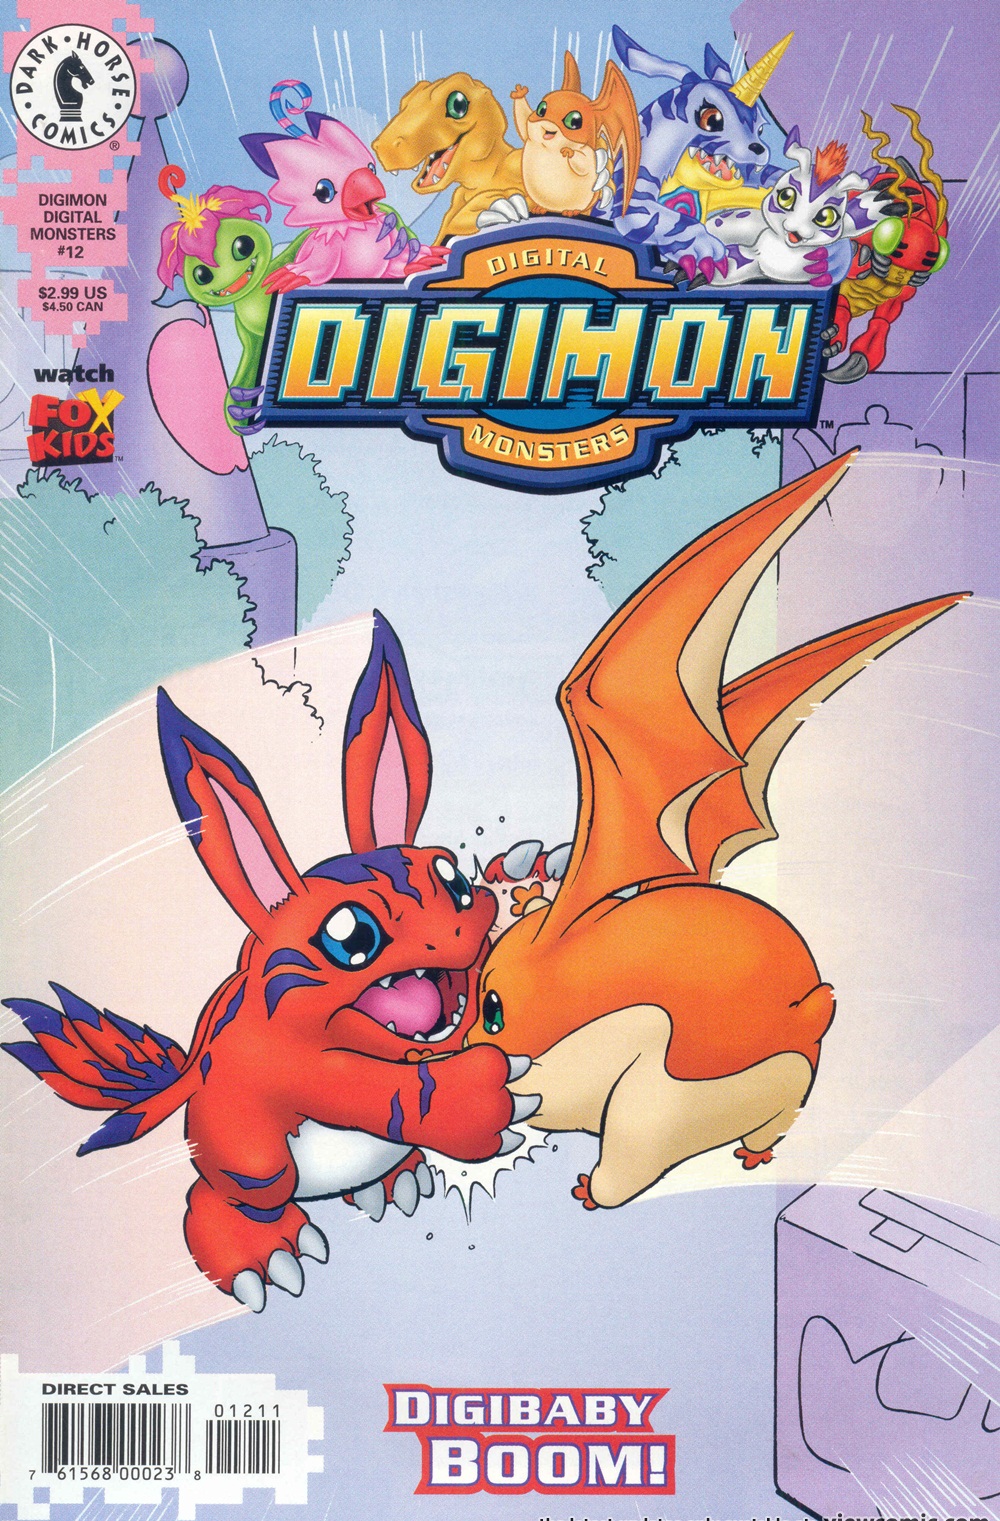 Digimon Digital Monsters | Read Digimon Digital Monsters comic online in  high quality. Read Full Comic online for free - Read comics online in high  quality .